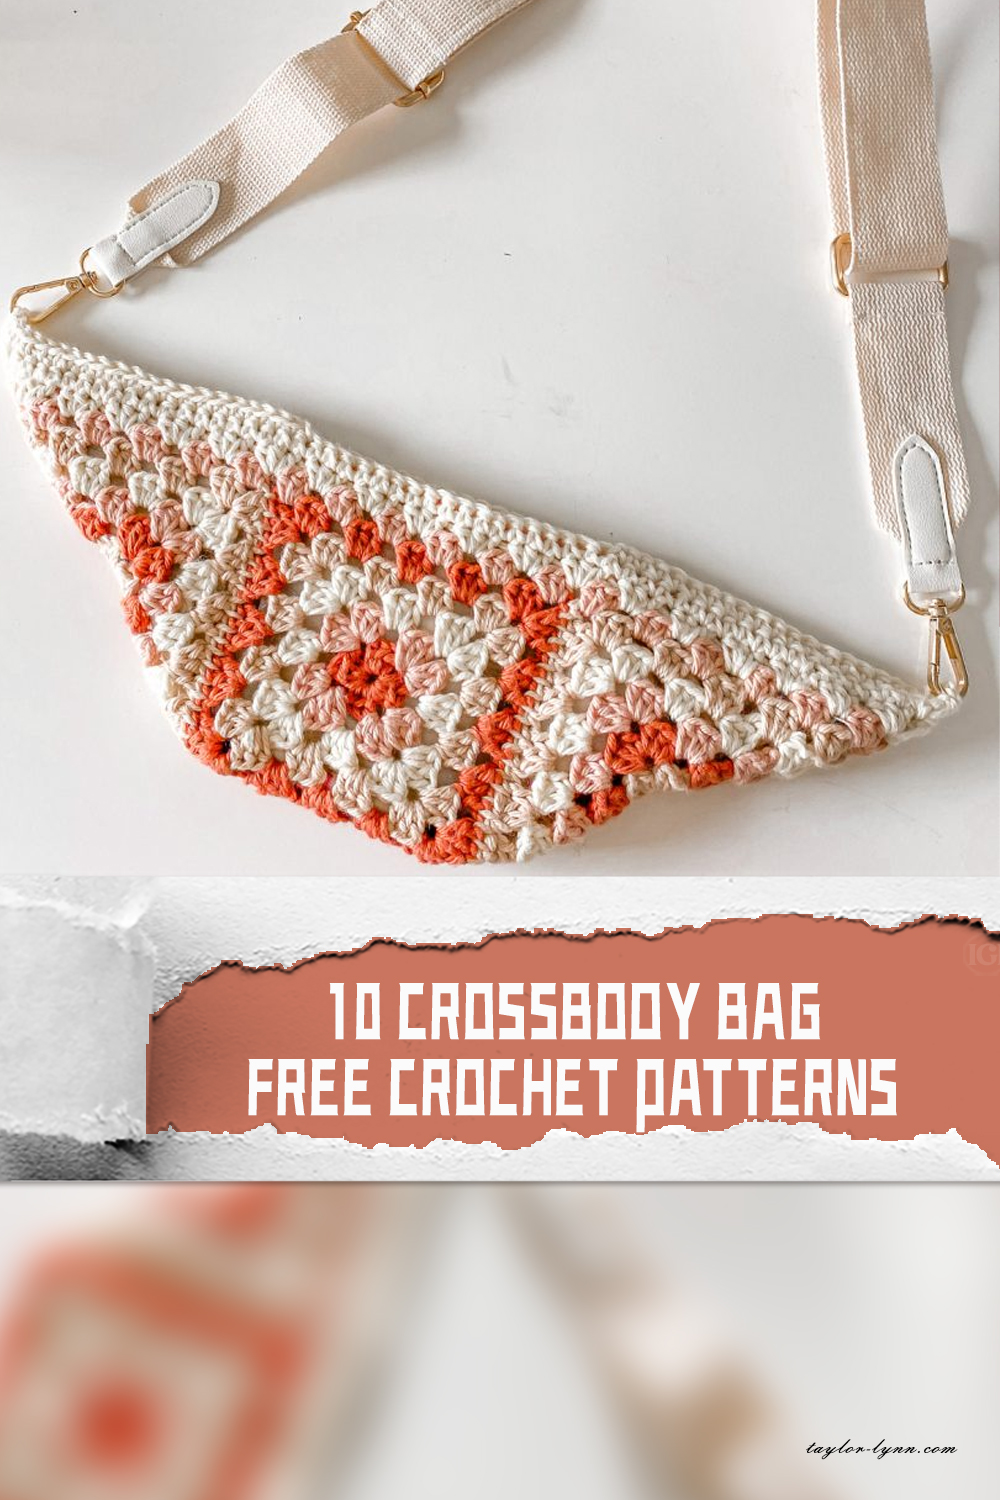 10 Crossbody Bag FREE Crochet Patterns